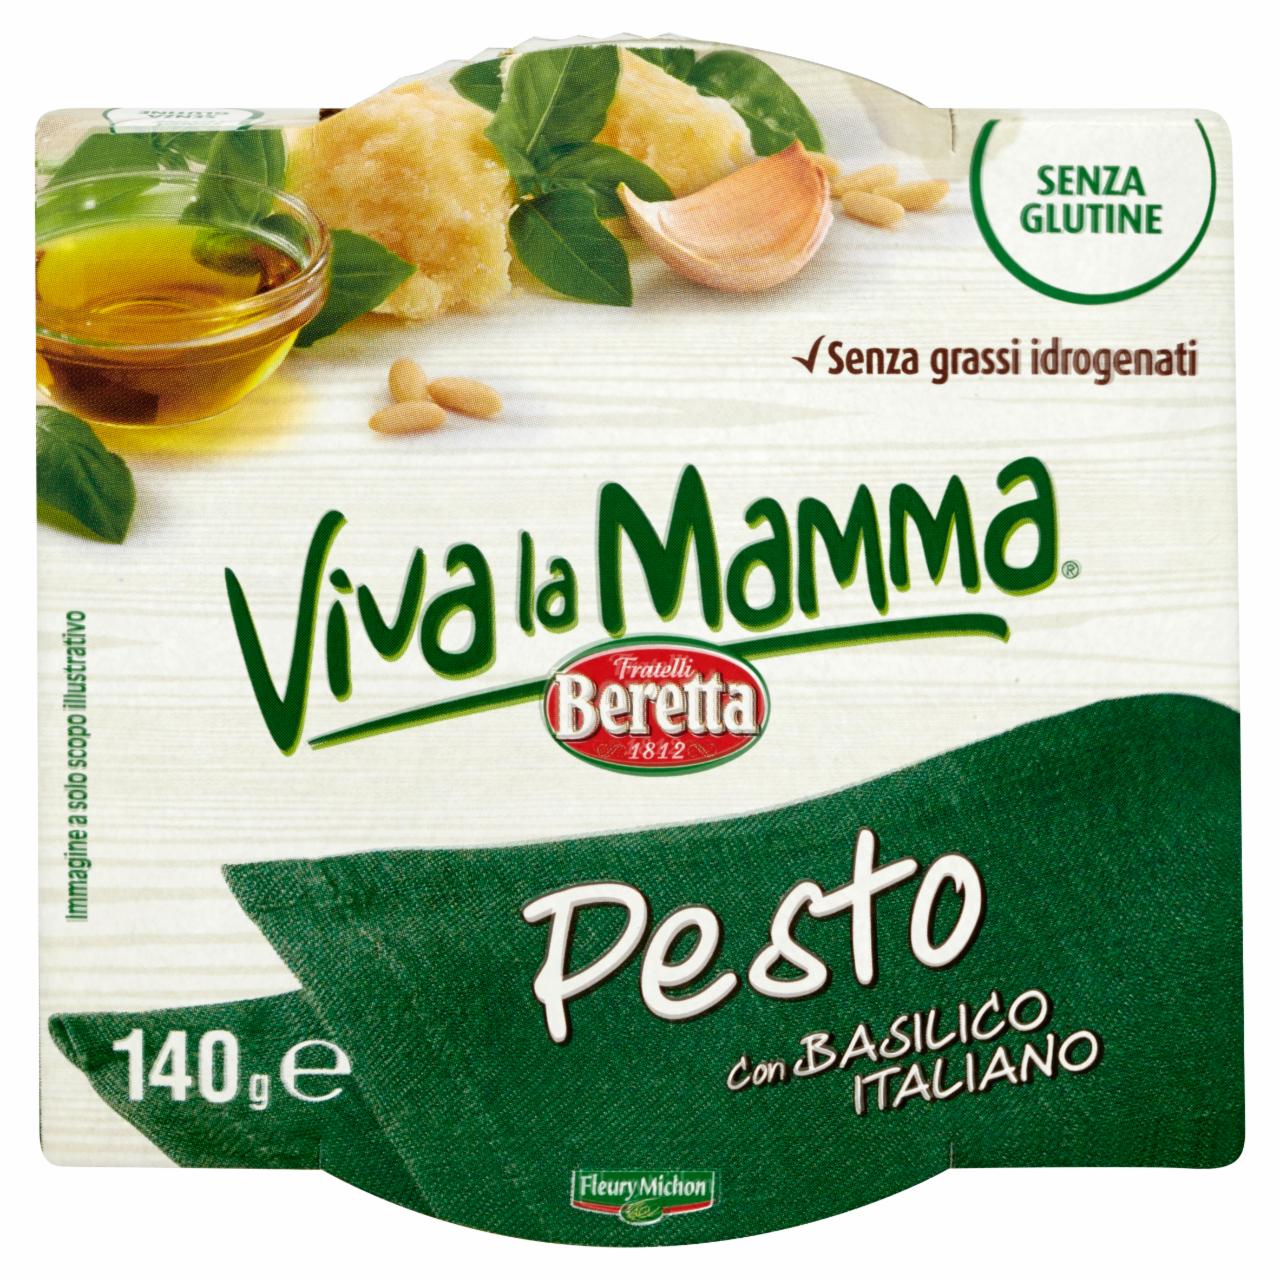 Zdjęcia - Fratelli Beretta Viva la Mamma Pesto 140 g